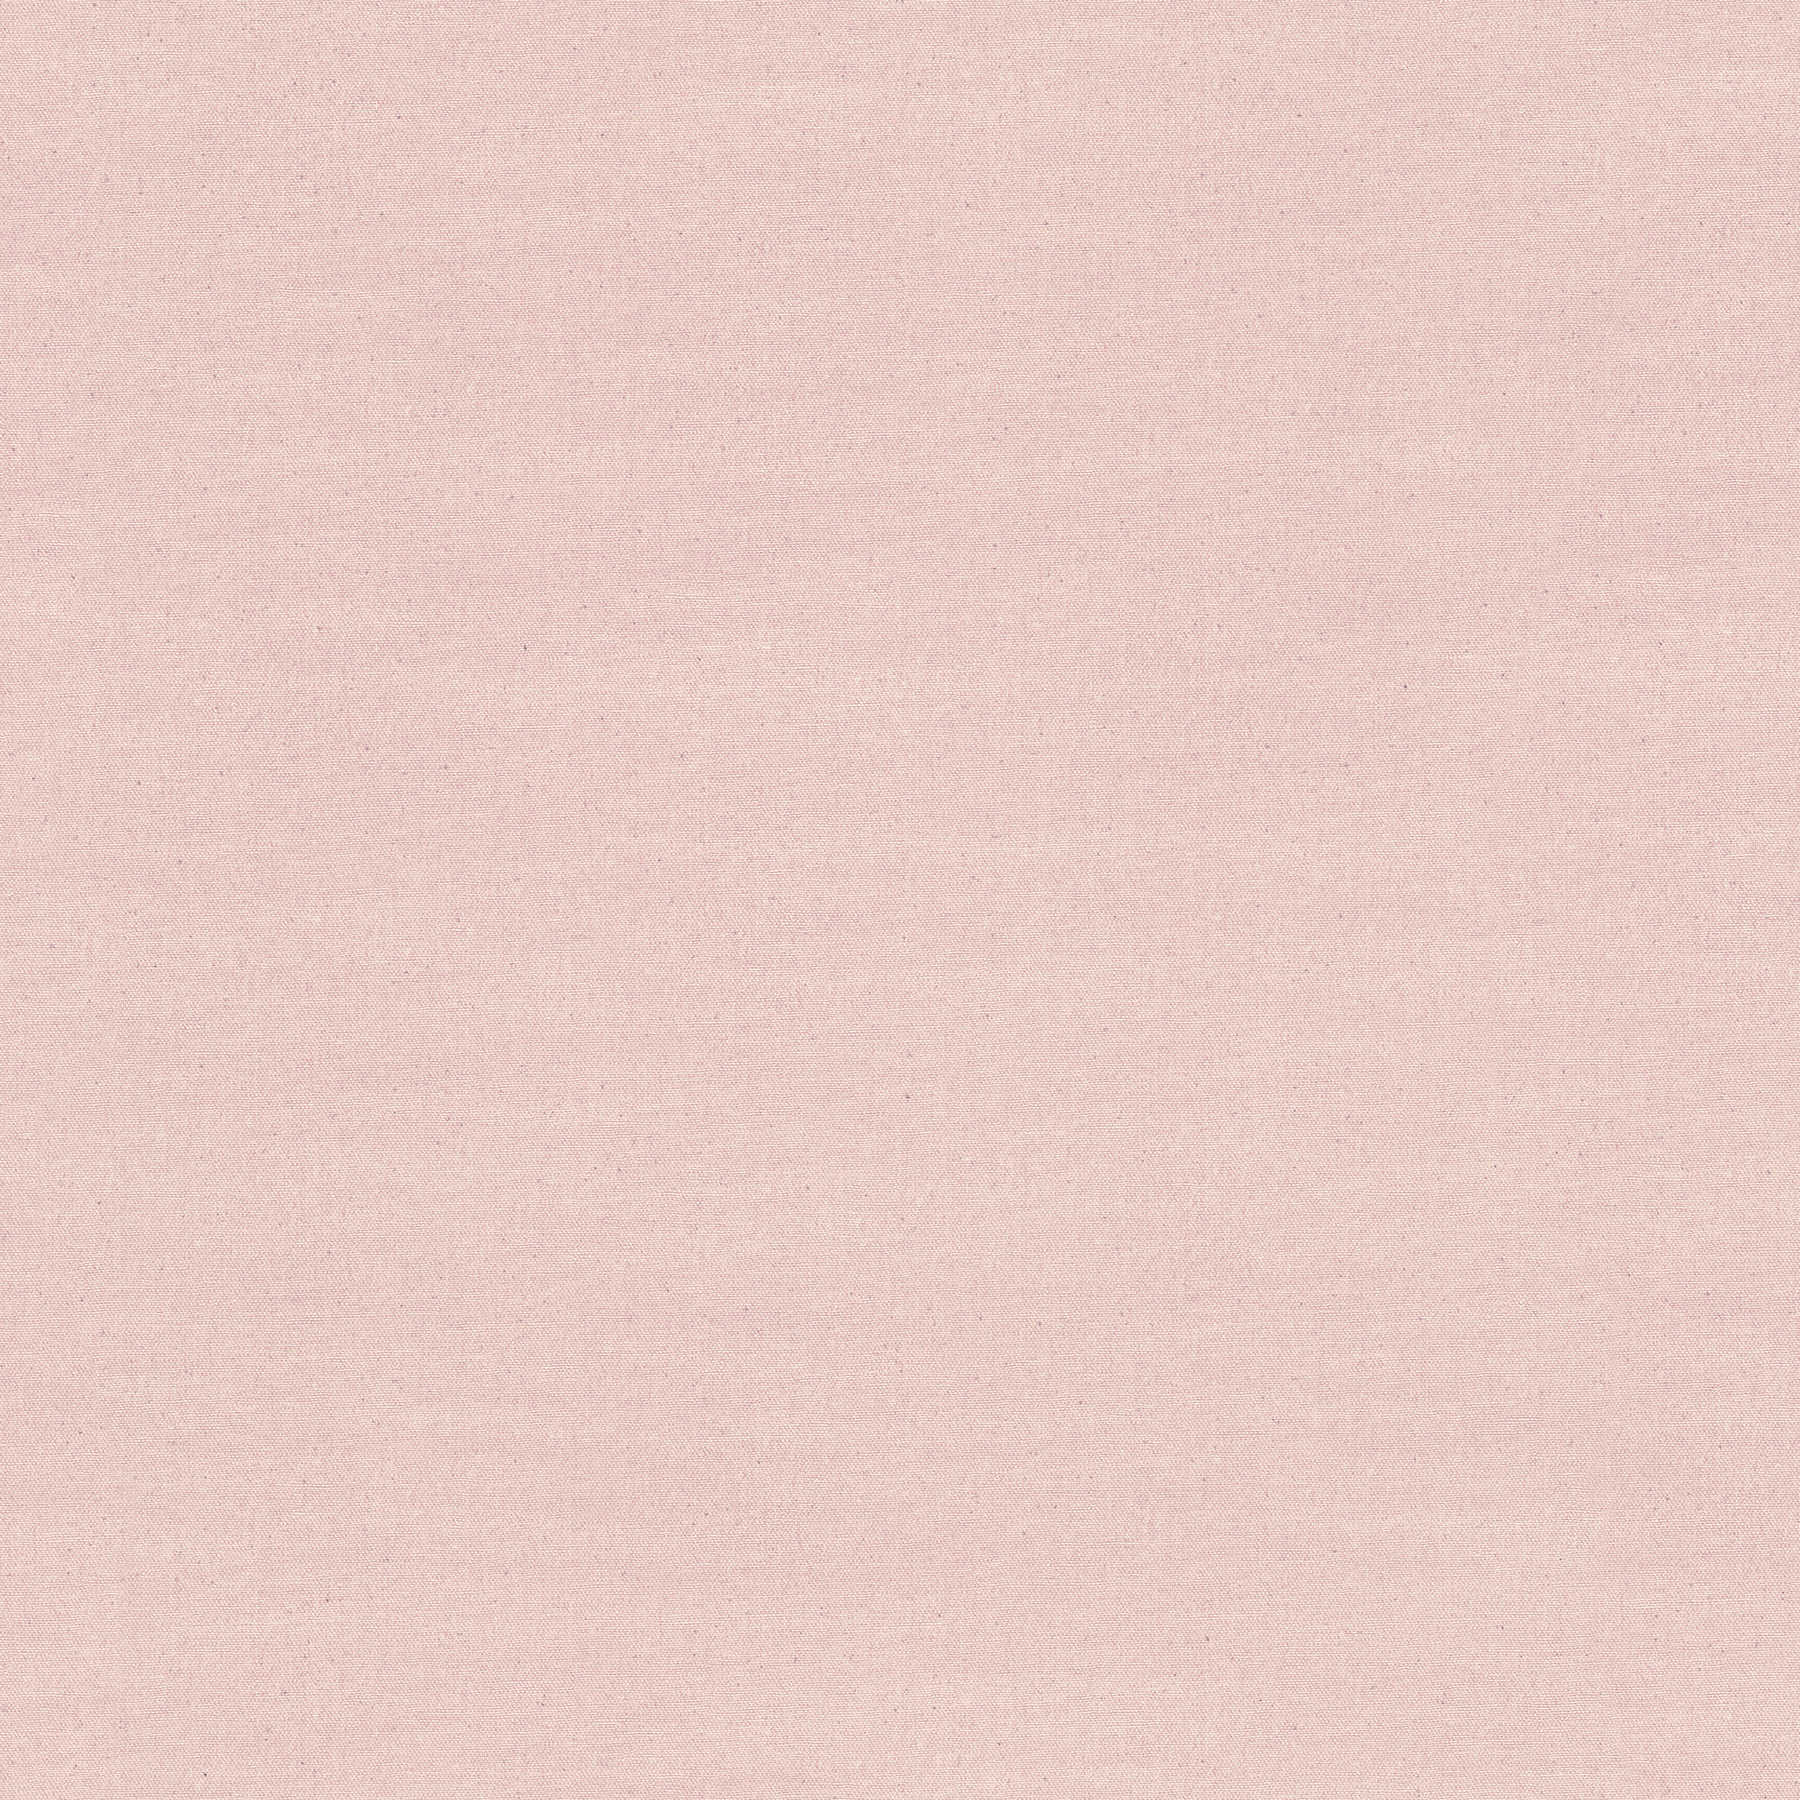 Plain wallpaper pink textile design with grey polka dots
